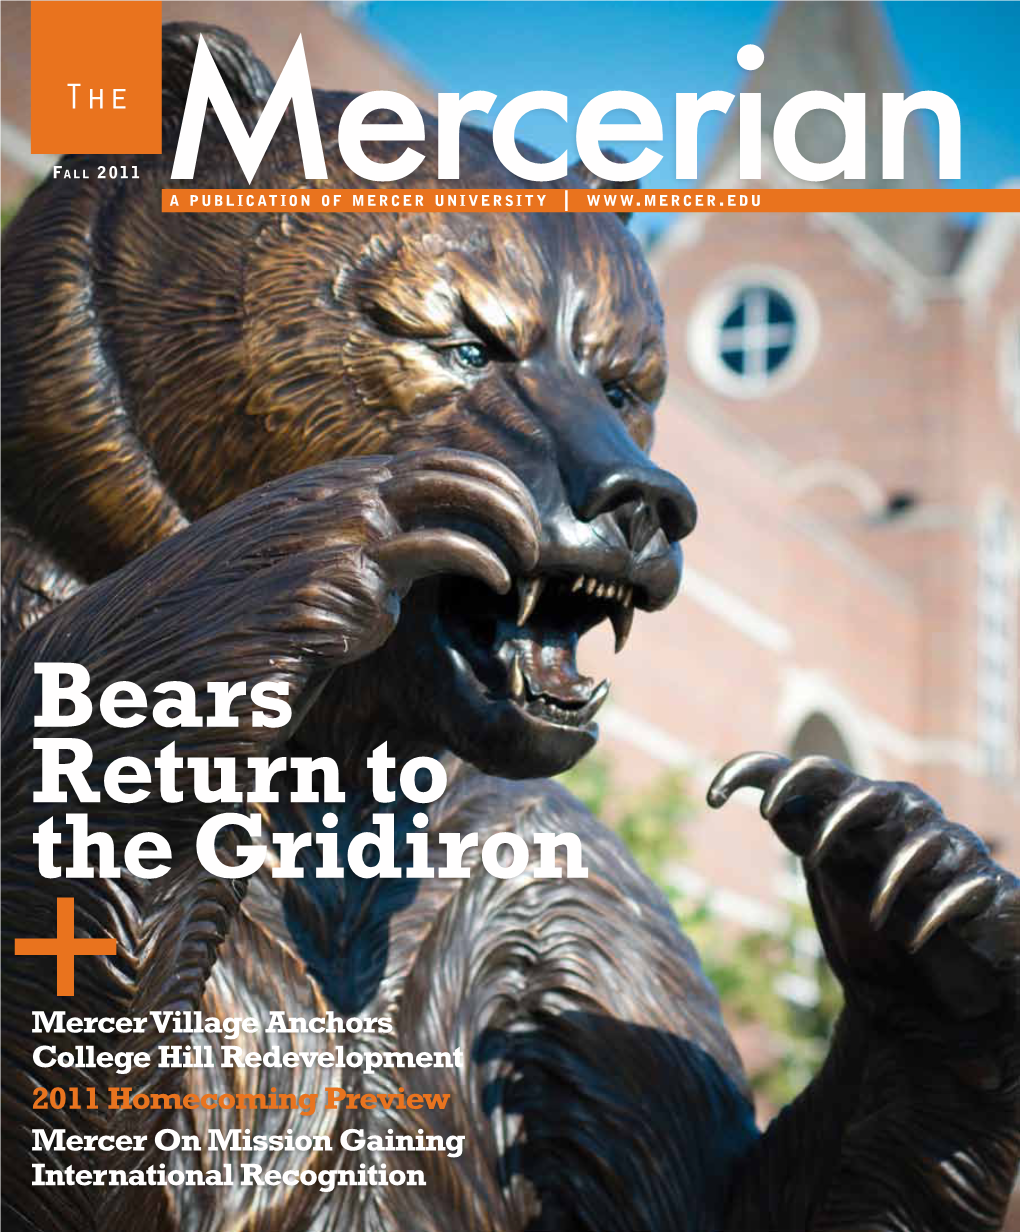 Bears Return to the Gridiron